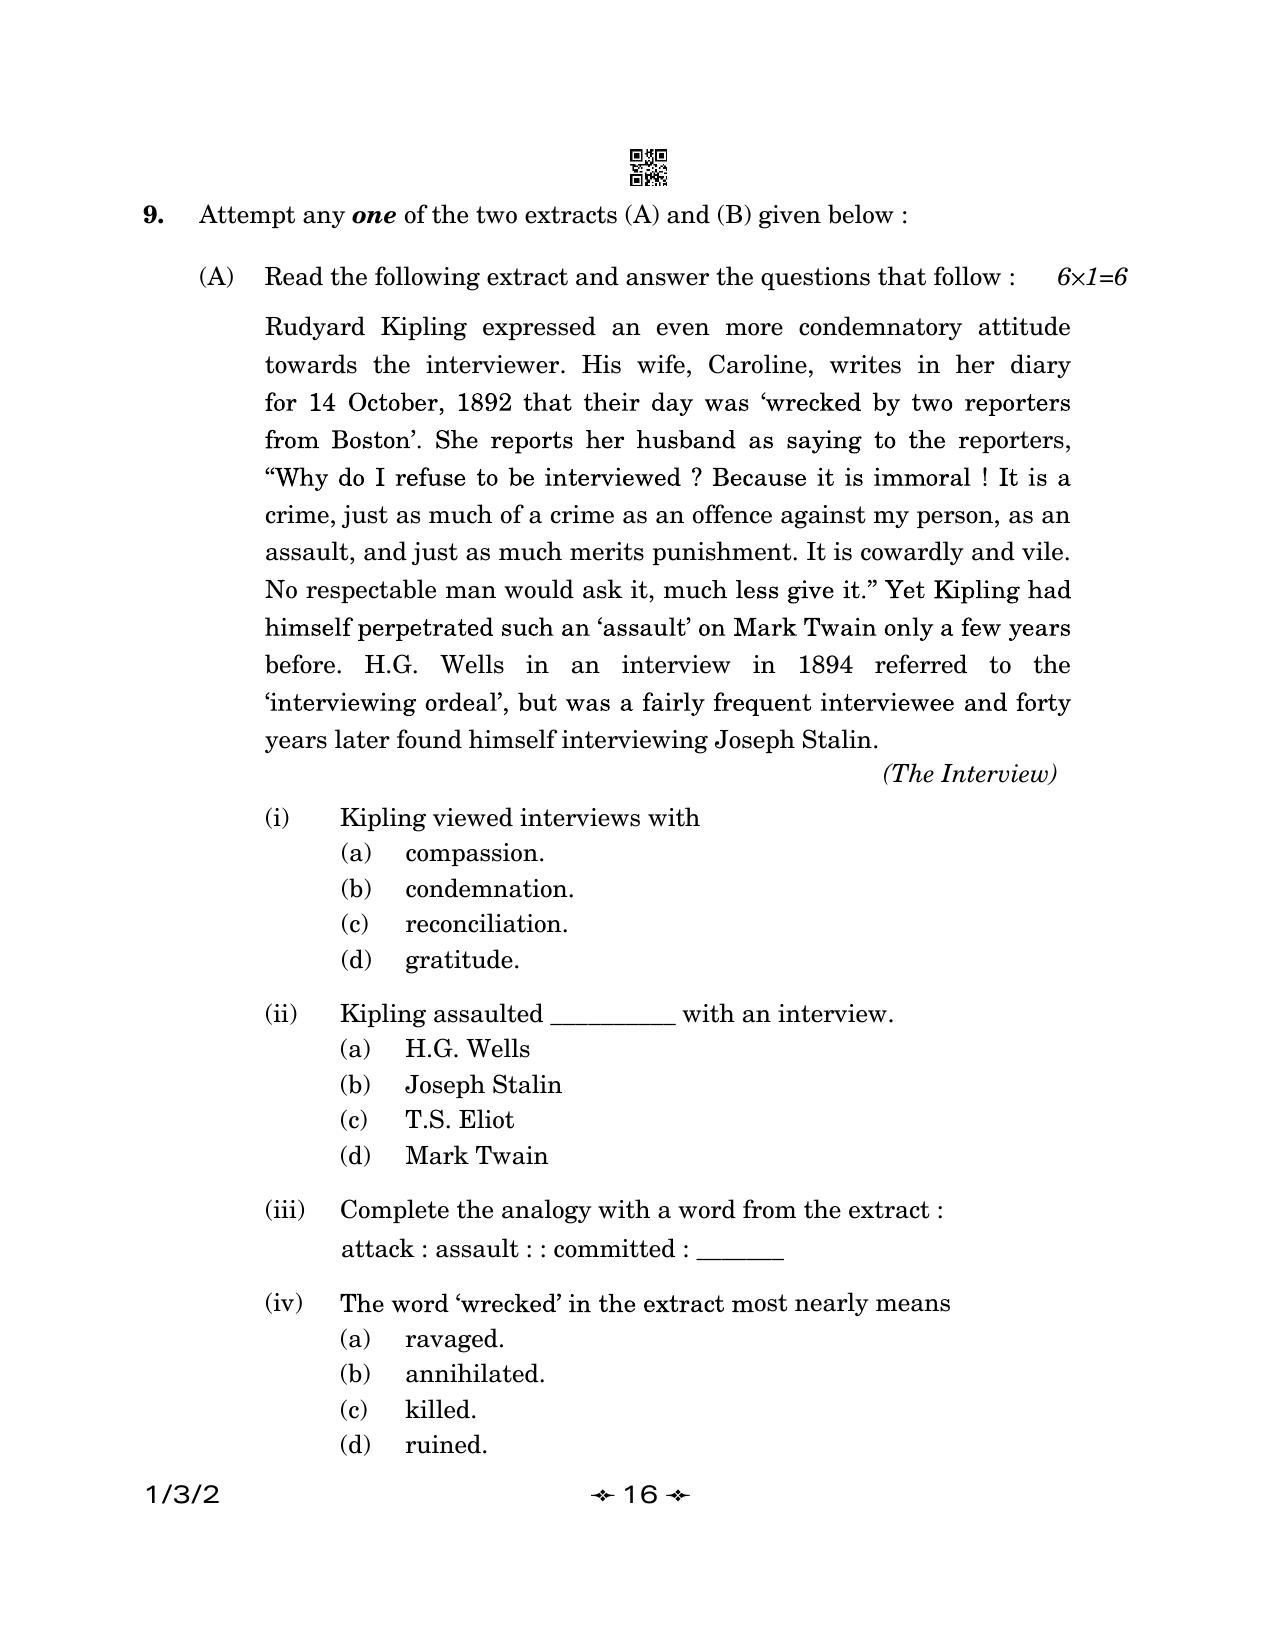 CBSE Class 12 1-3-2 English Core 2023 Question Paper - Page 16